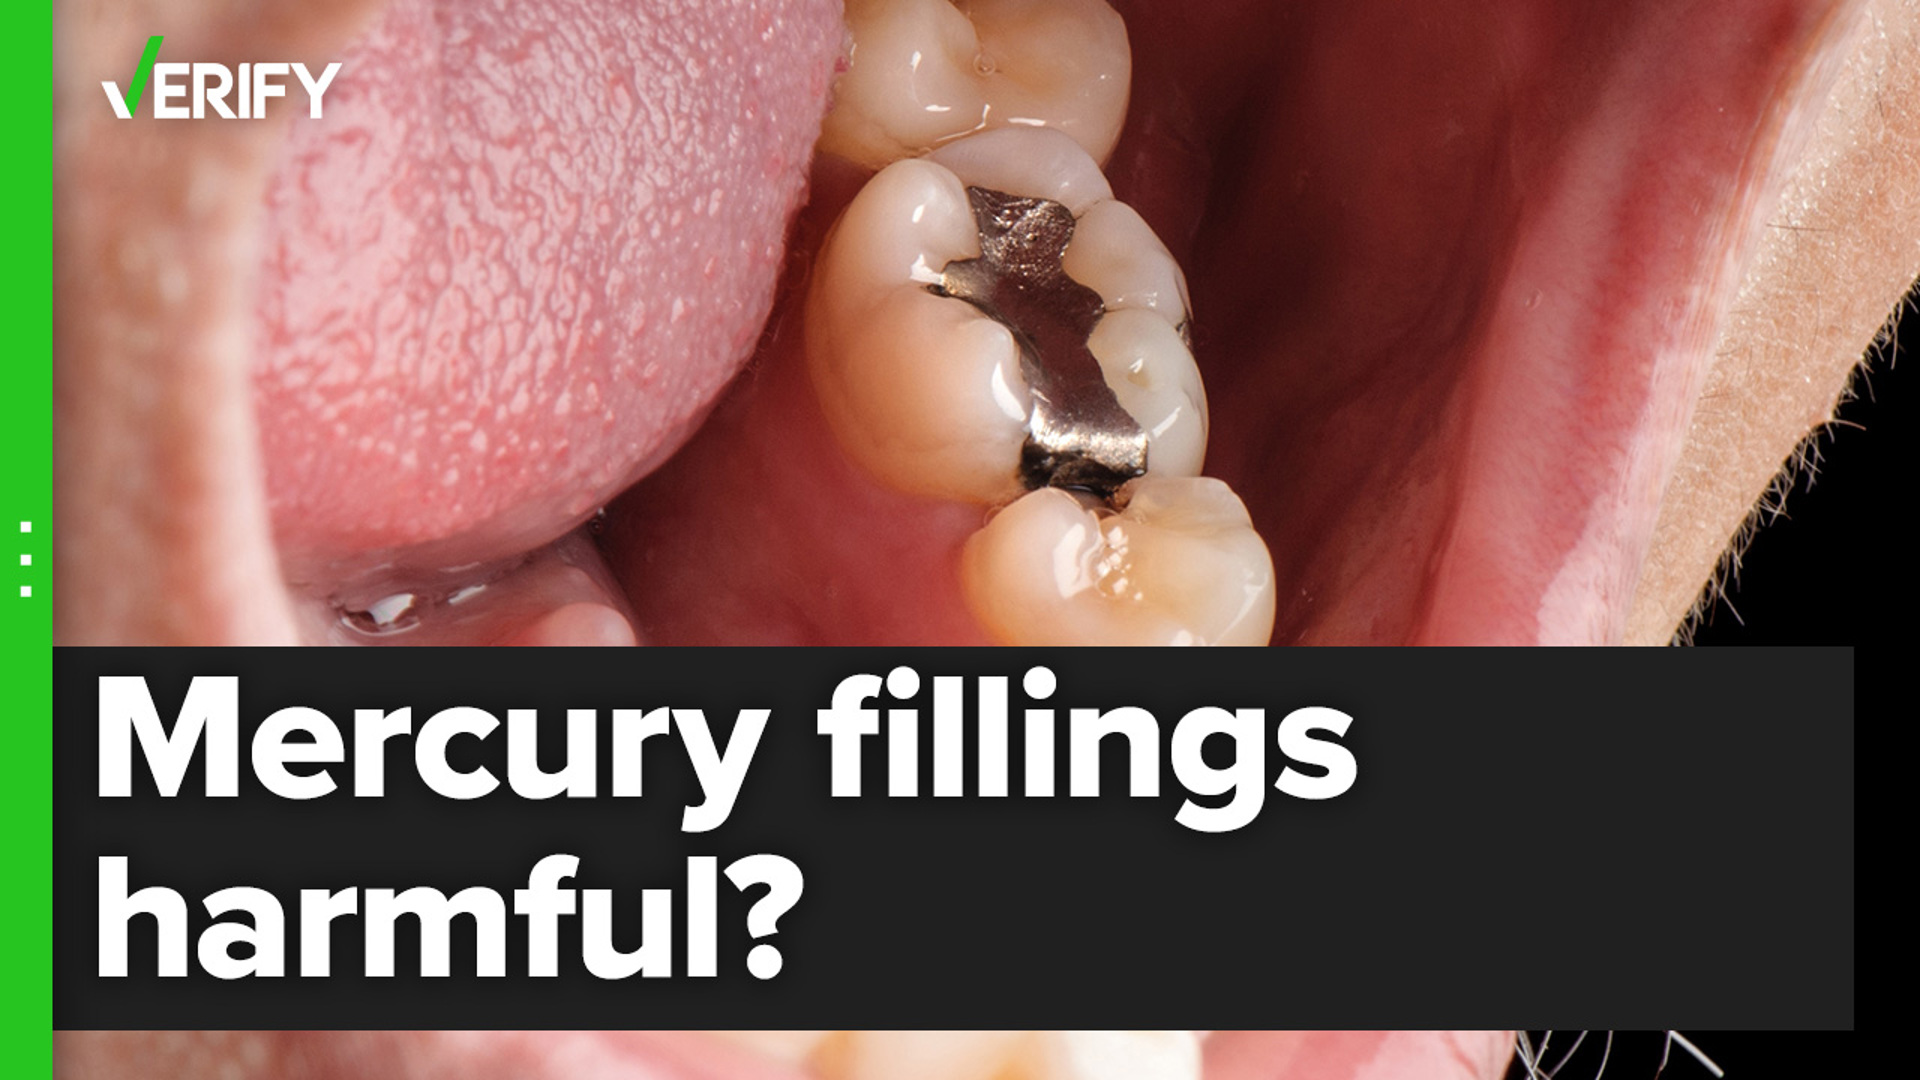 Mercury dental amalgam fillings are safe for most people